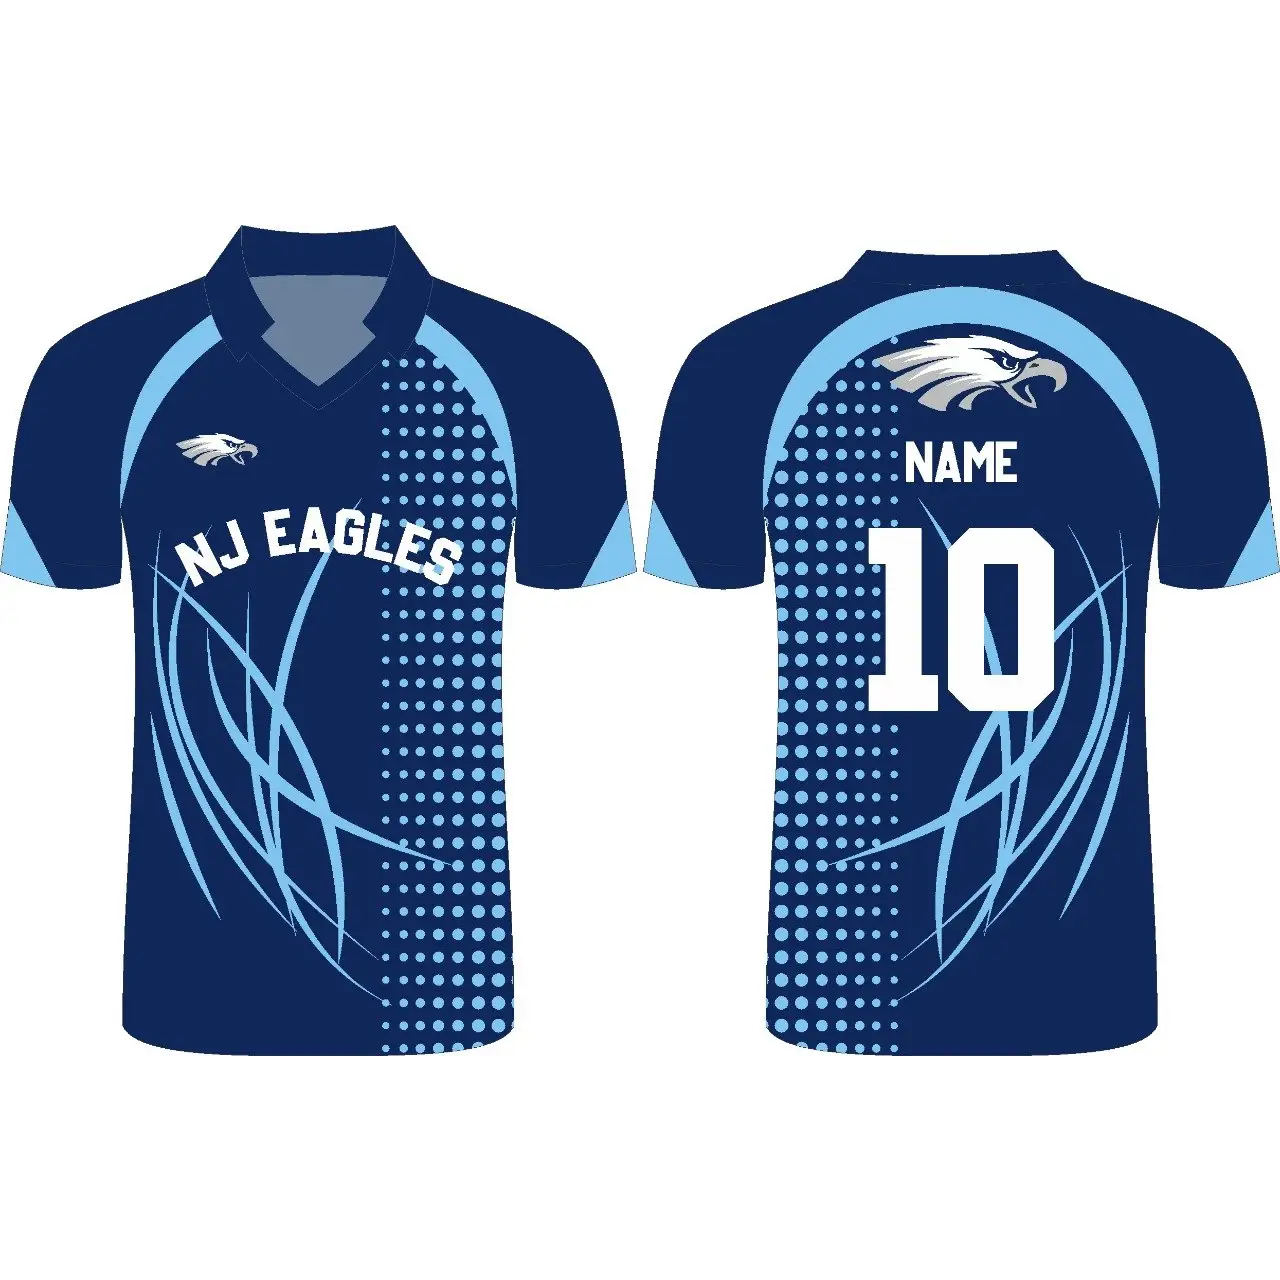 Cricket Sports Jersey Blue V-neck Design Sublimated - S-XL - Custom Cricket Jerseys